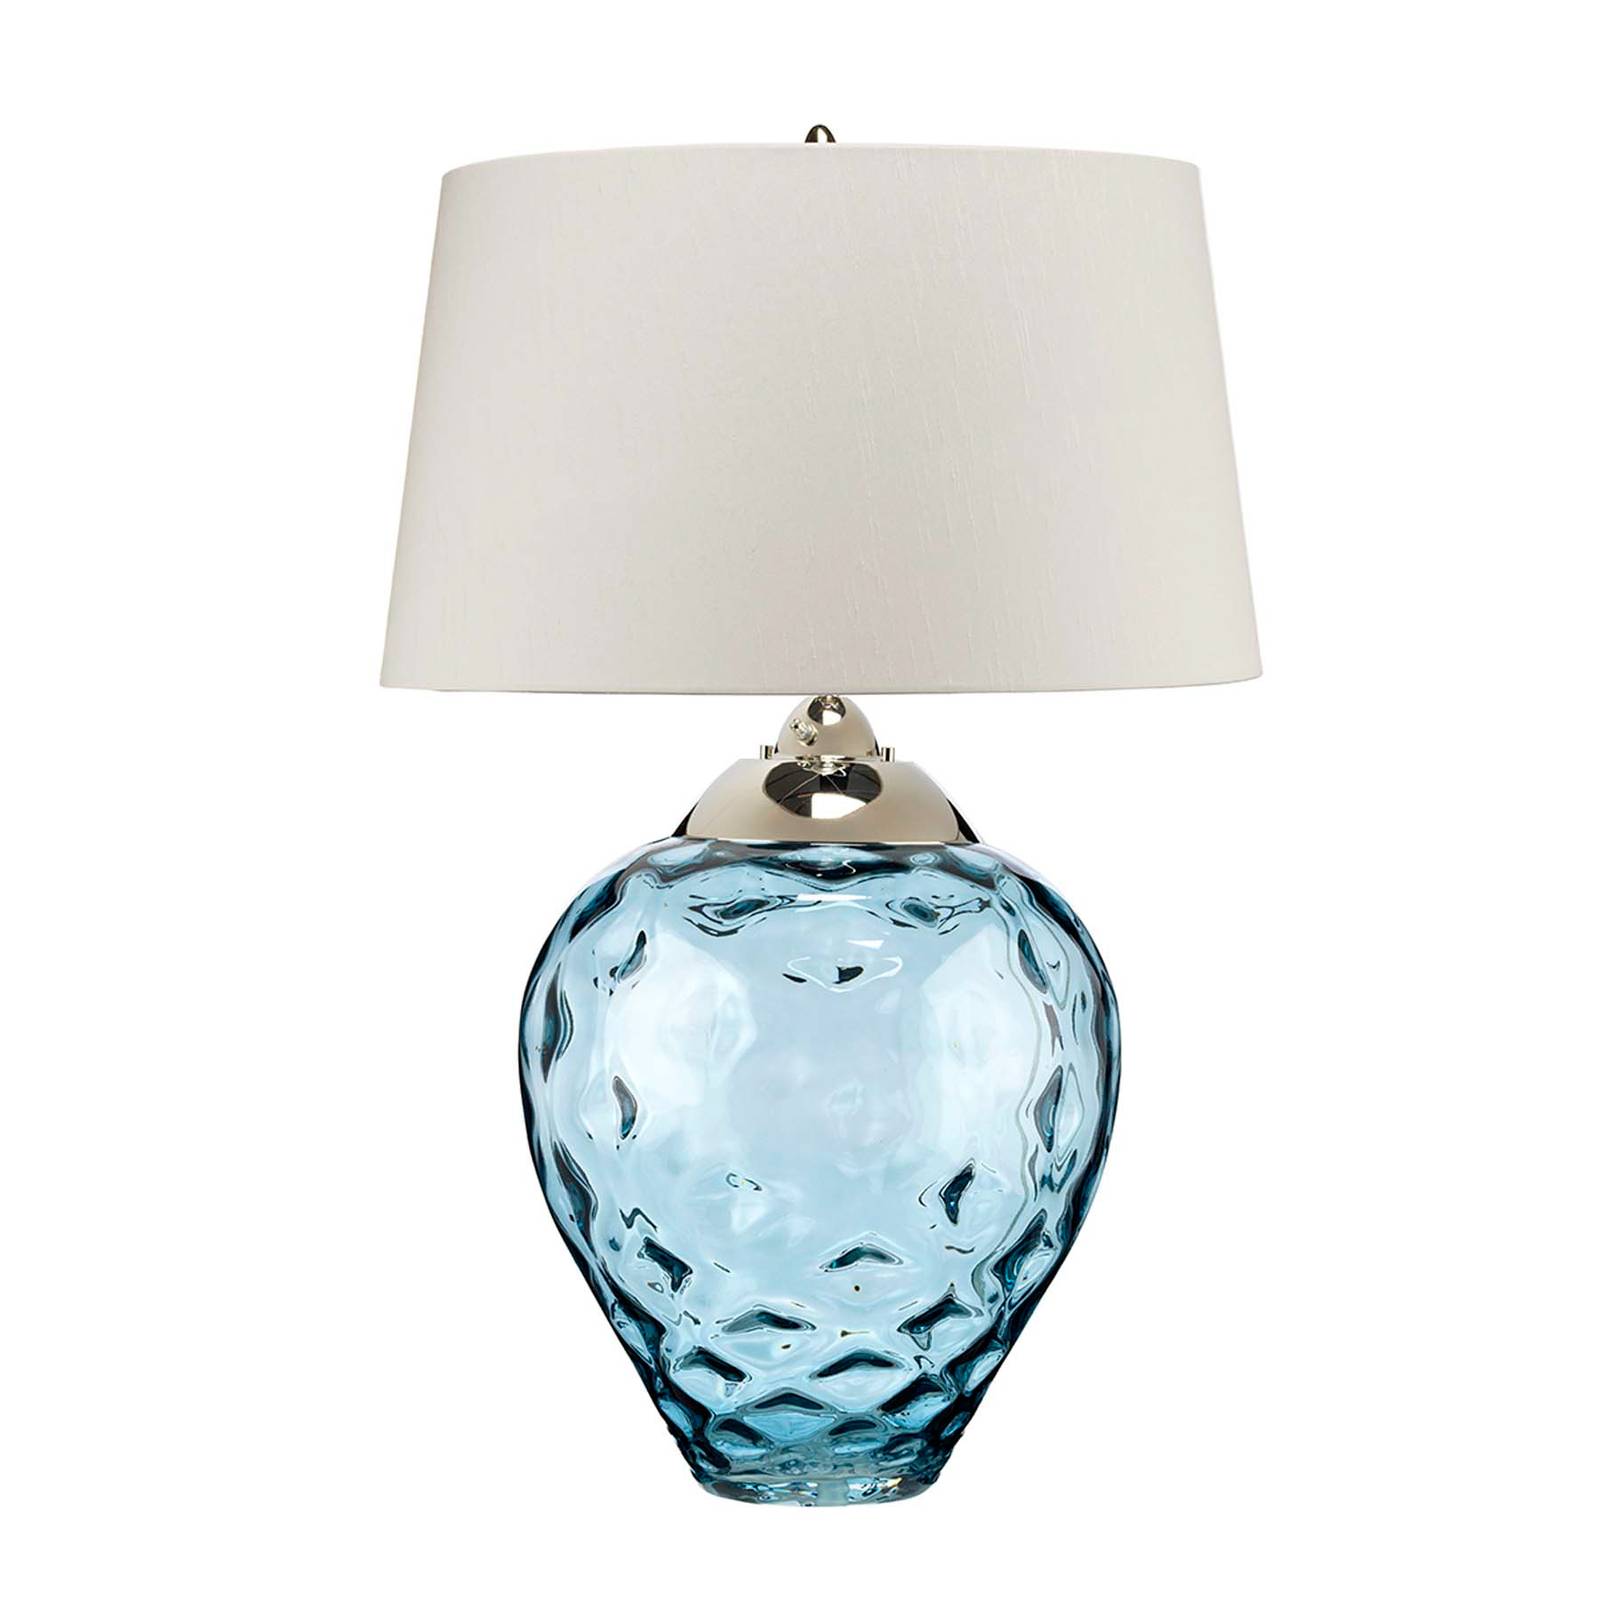 Stolná lampa Samara, Ø 51 cm, modrá, látka, sklo, 2 svetlá